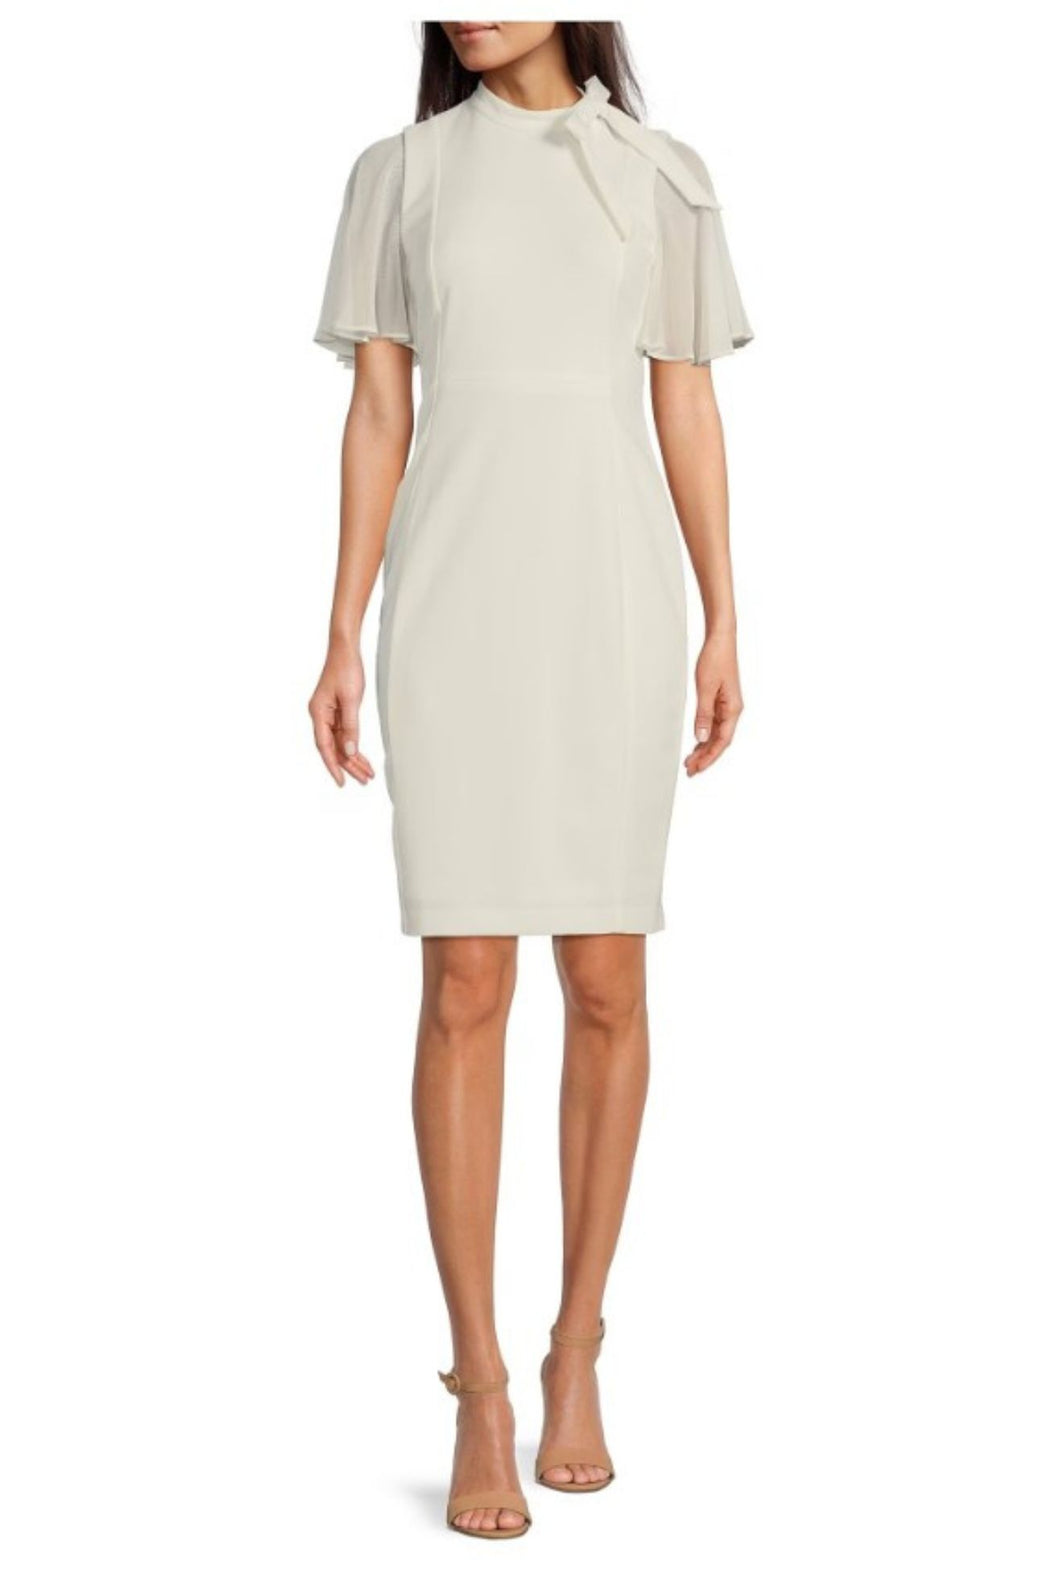 Calvin Klein White Dress with Flutter Sleeve, Size 16